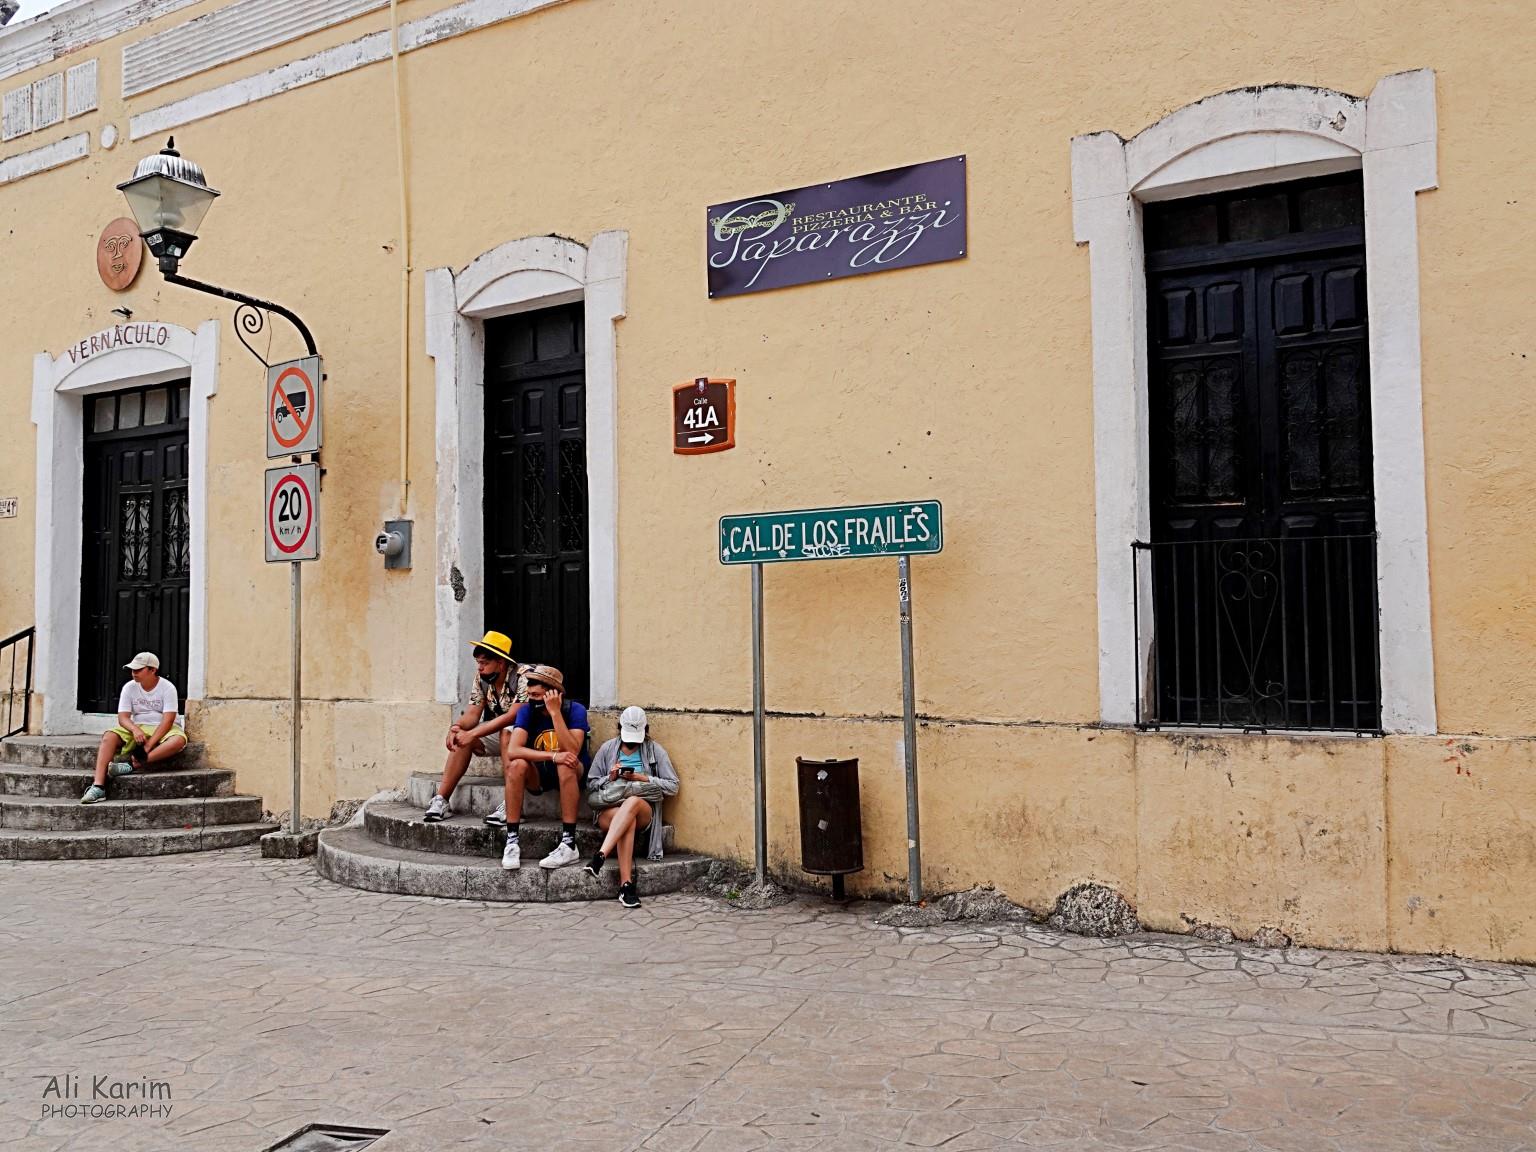 Valladolid, Yucatan, Mexico Feb 2021, Calle de Los Frailes (Street of the Friars); a historical street in Valladolid